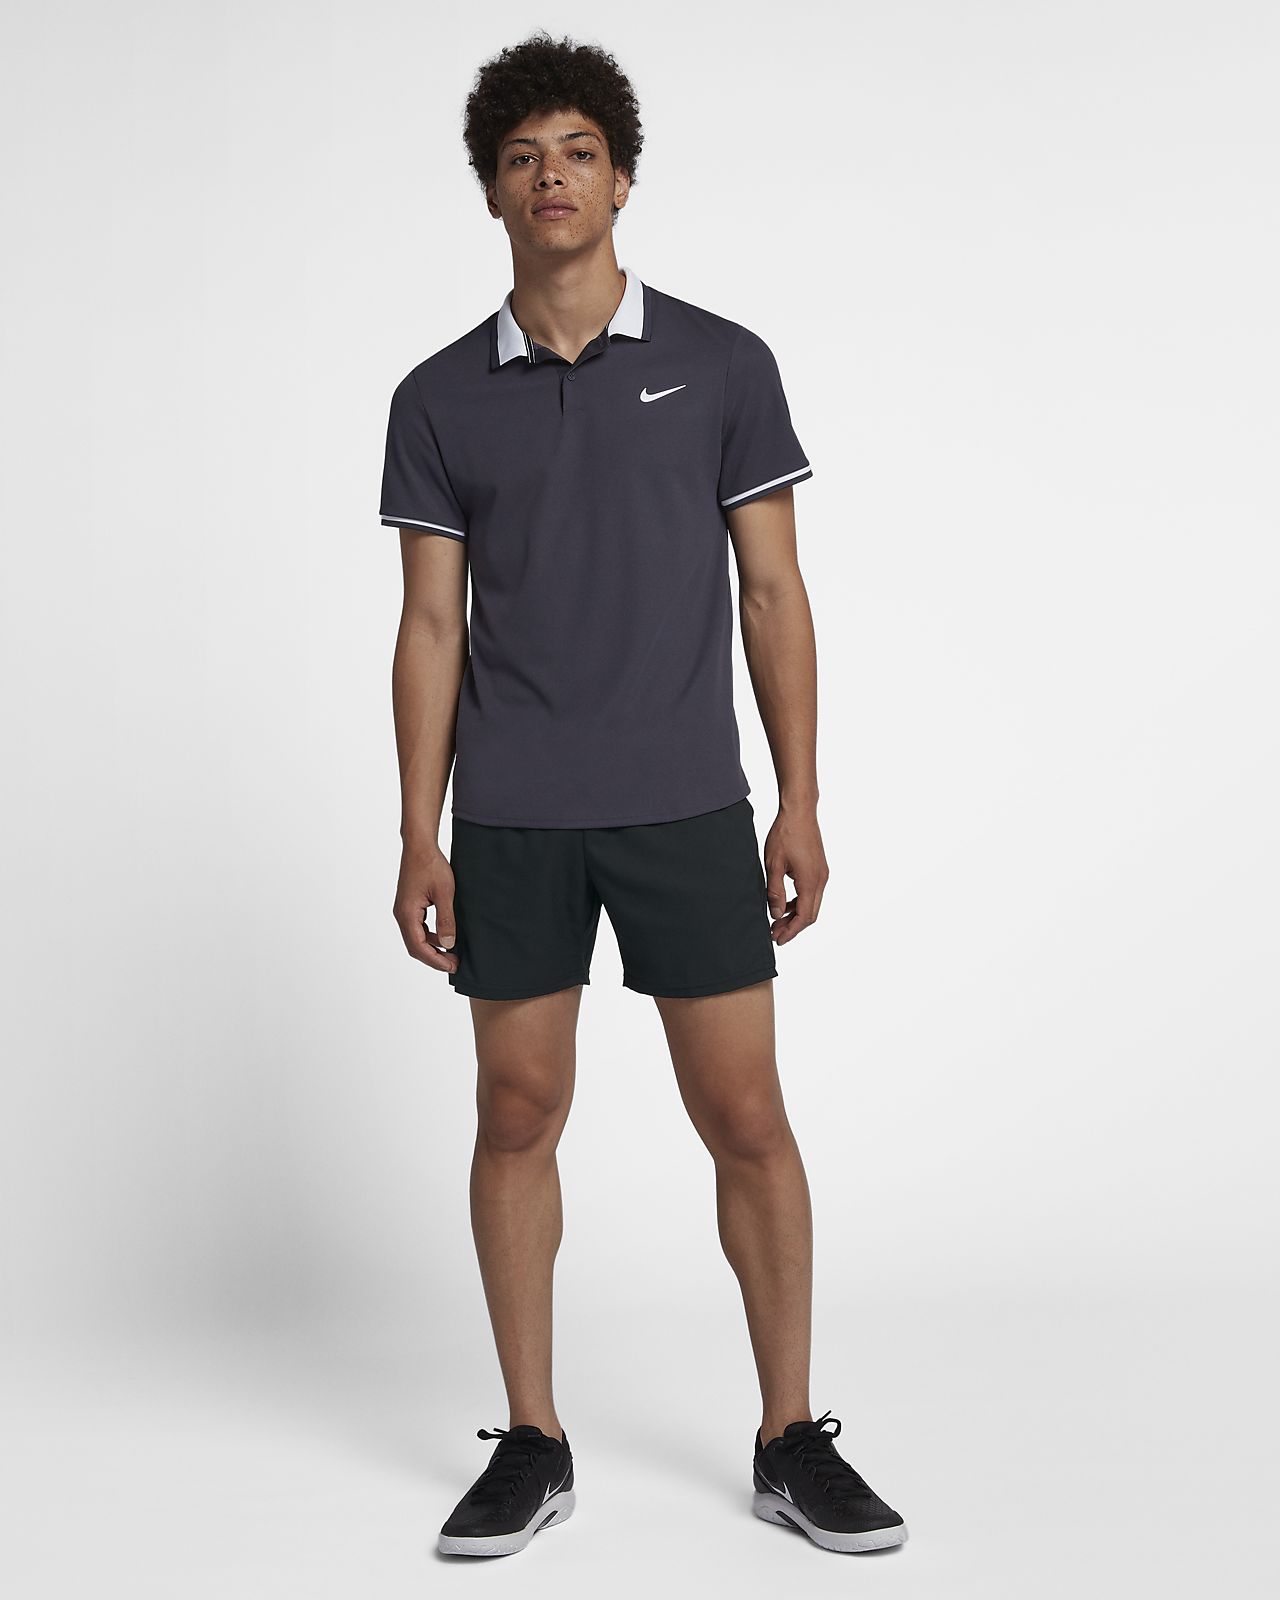 nike tennis tops mens Shop Clothing 